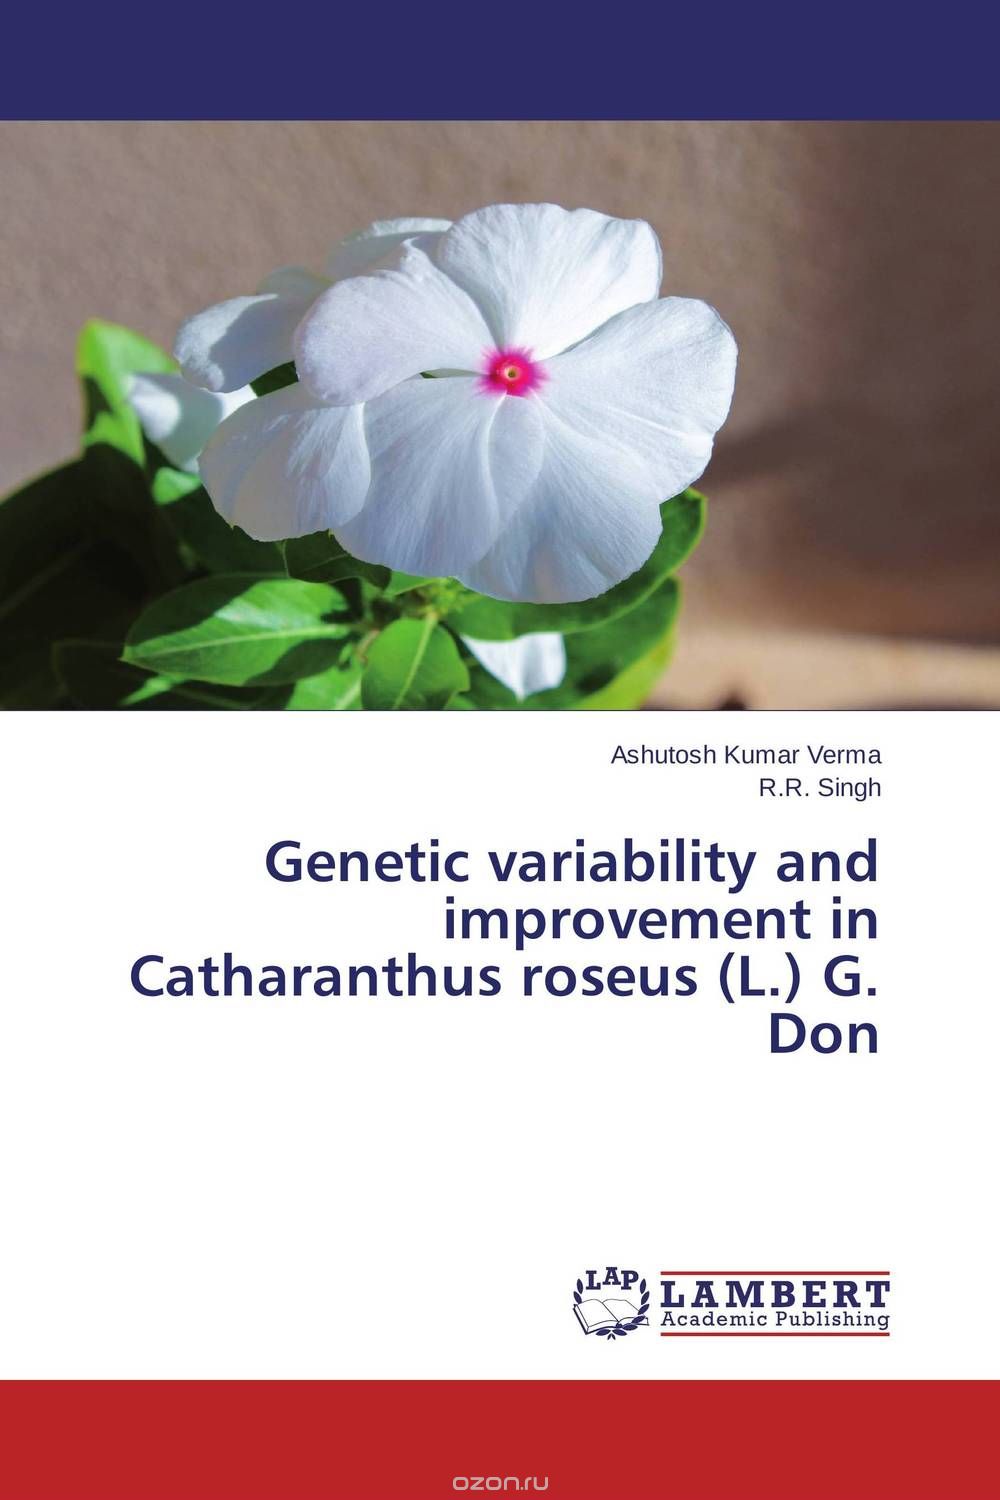 Скачать книгу "Genetic variability and improvement in Catharanthus roseus (L.) G. Don"